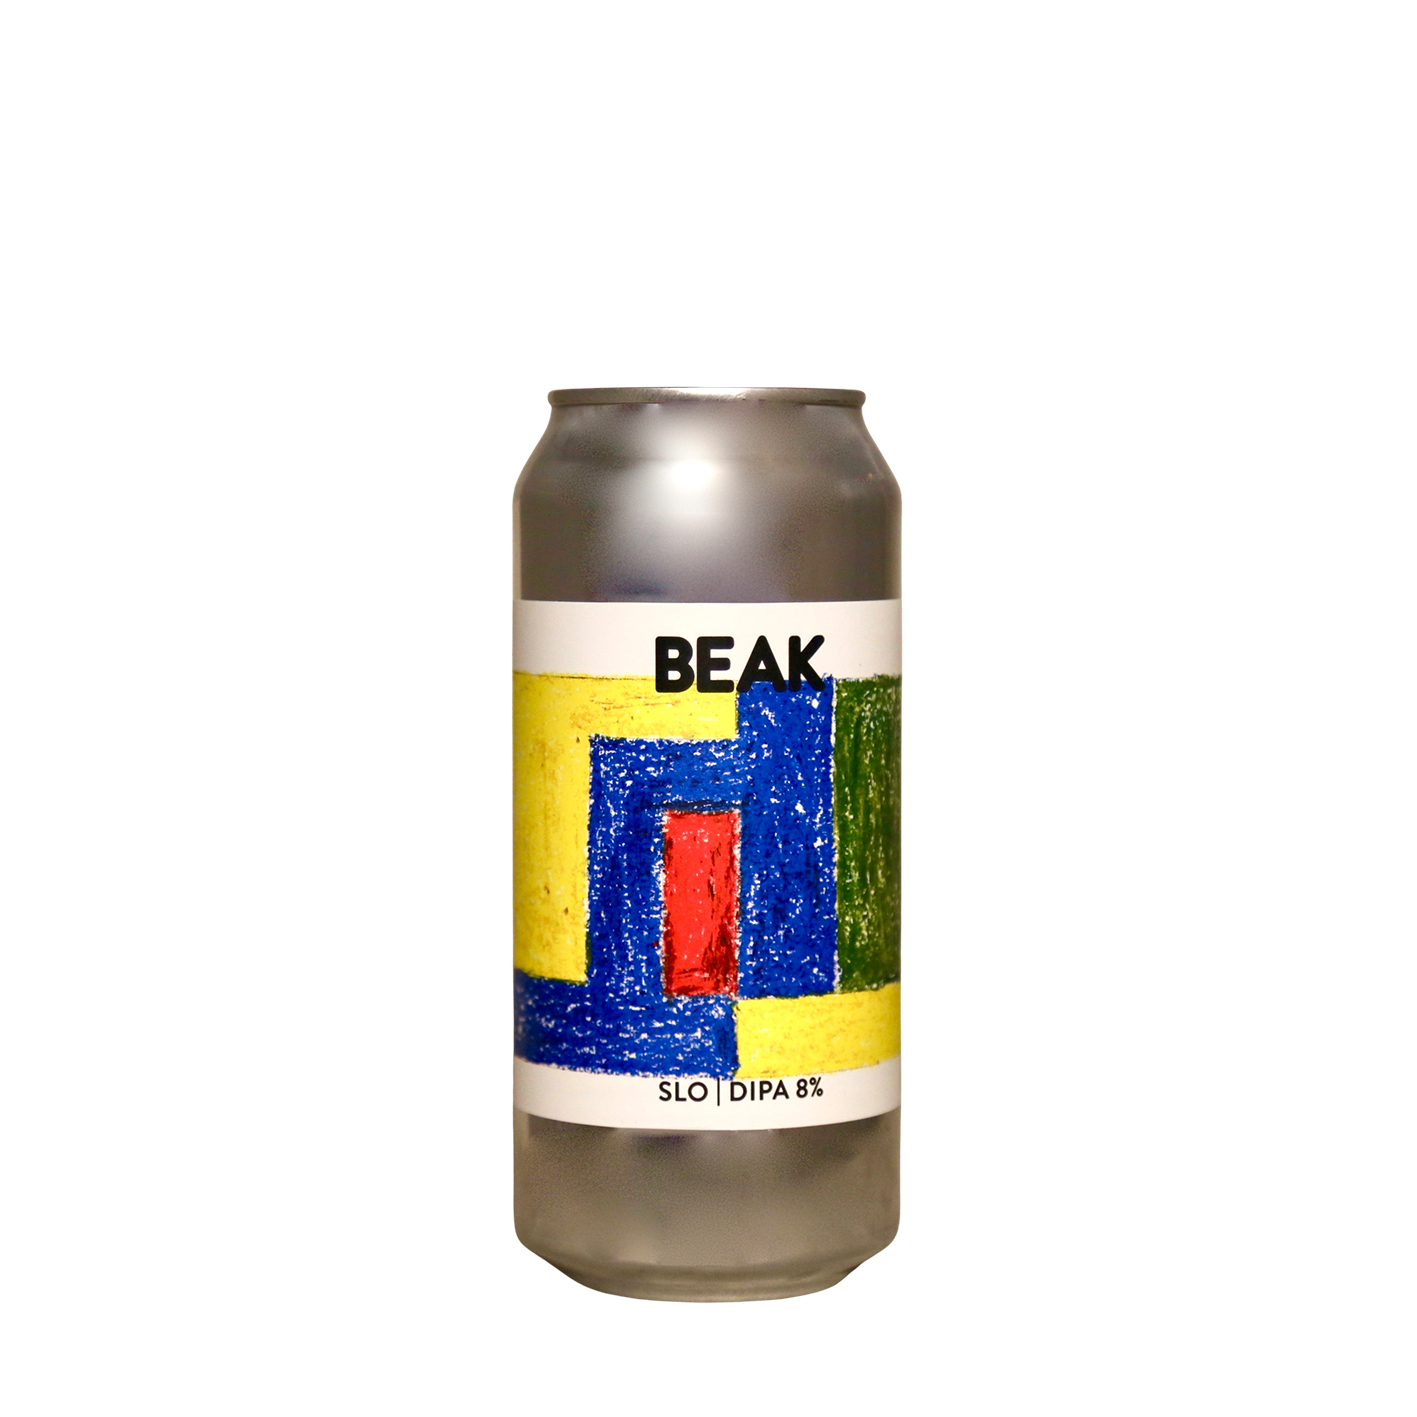 Beak Brewery – Slo Dipa 